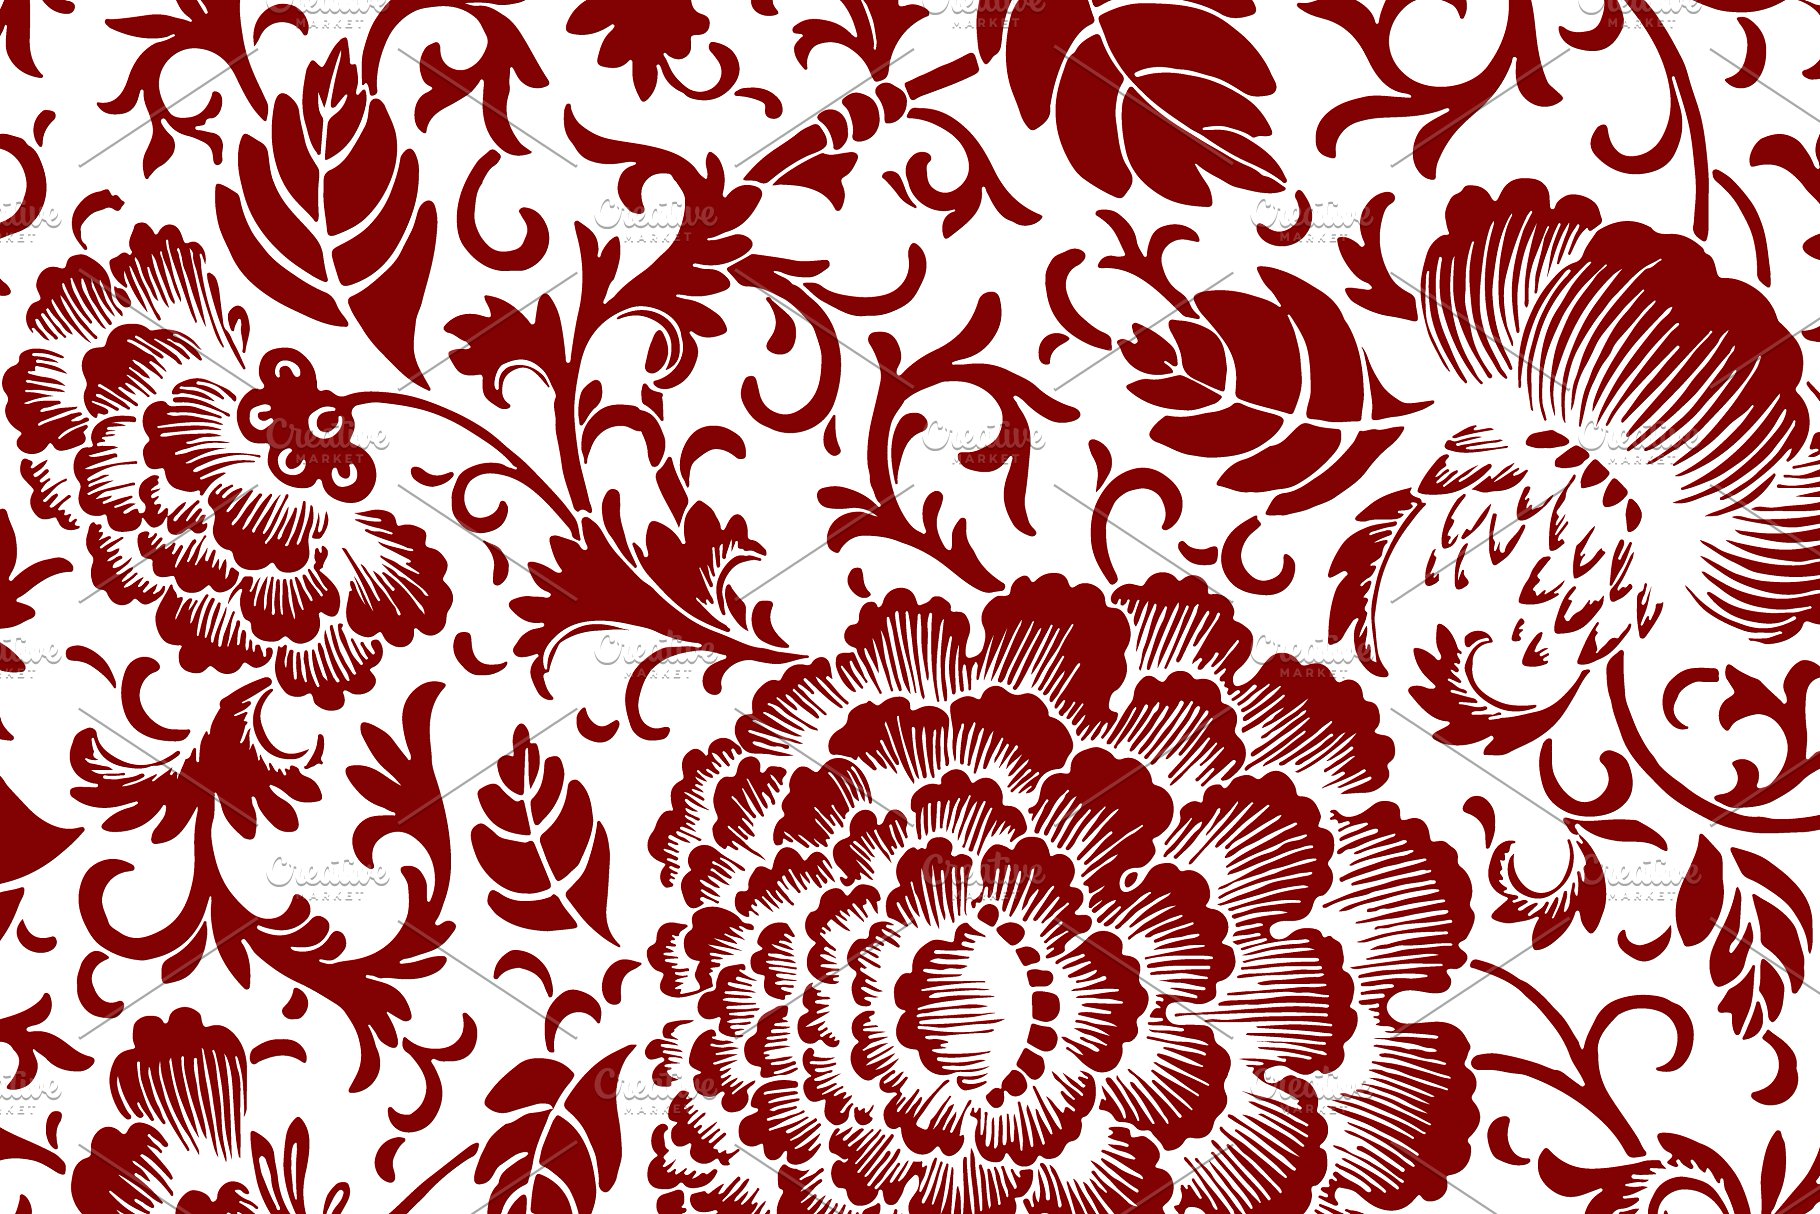 60种配色1440款花卉图案纹理 1,440 Floral Patterns in 60 Colors插图(10)